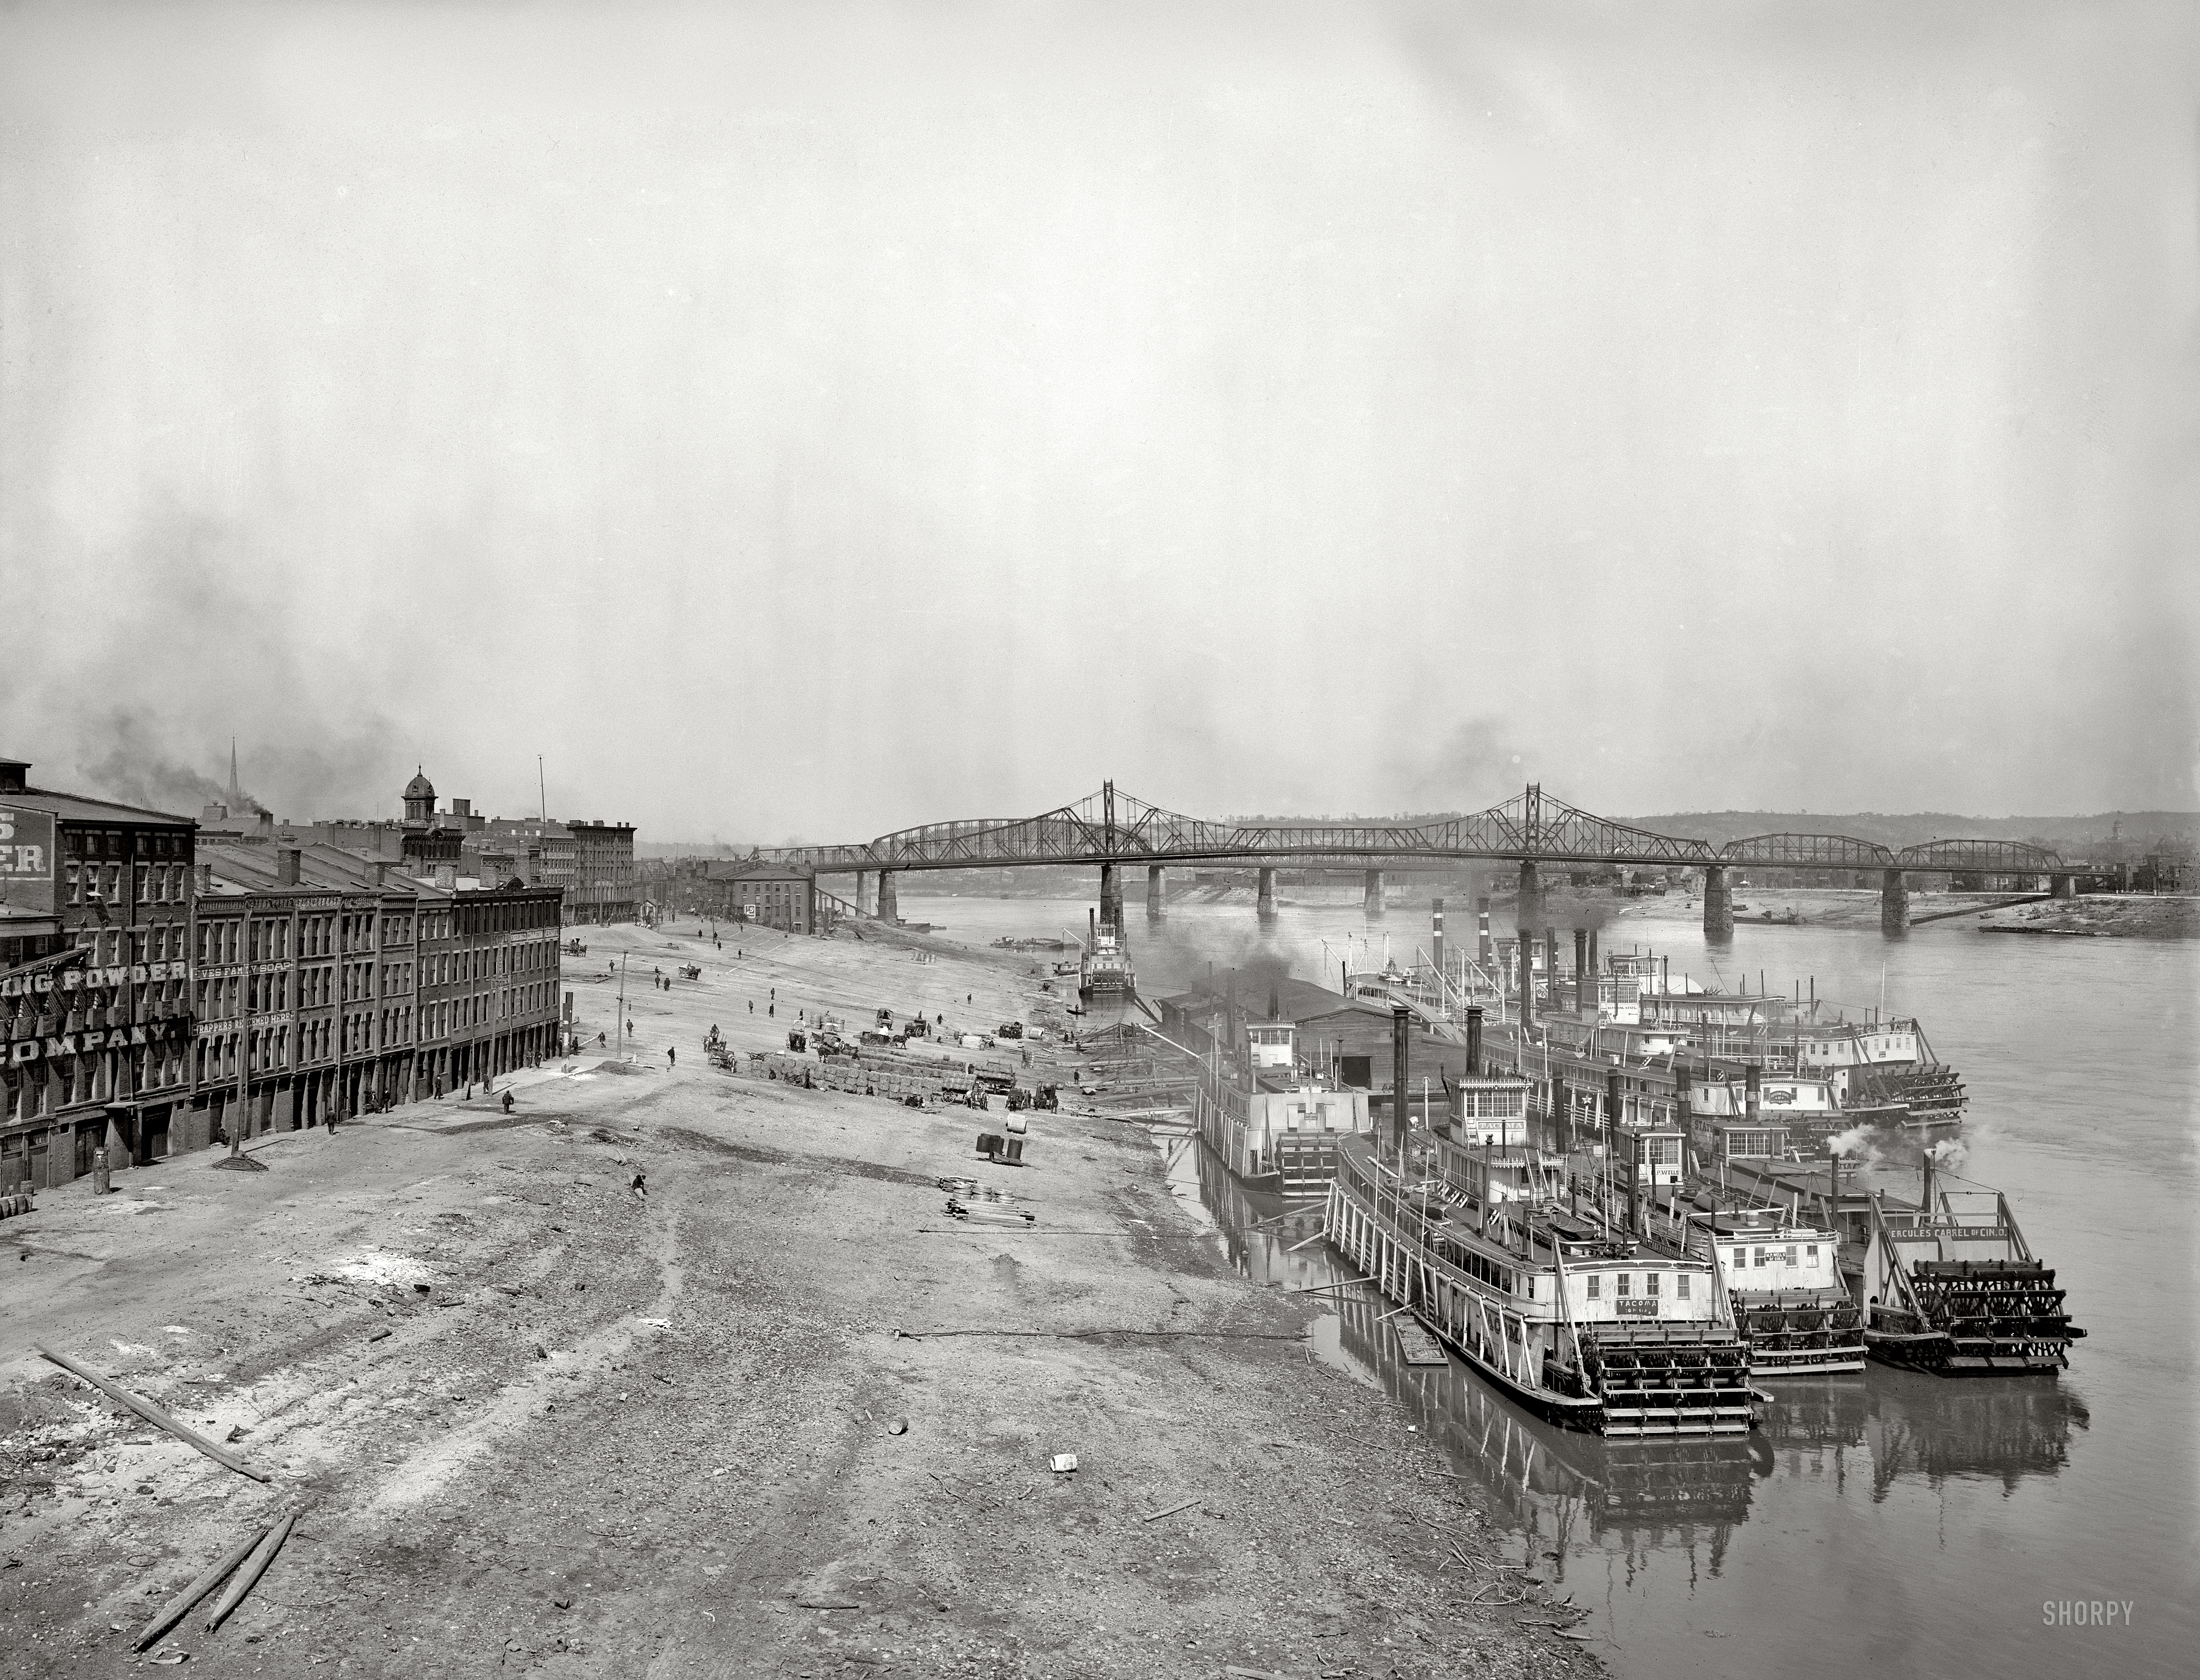 The Ohio River circa 1904. "Along the levee, Cincinnati." 8x10 inch dry plate glass negative, Detroit Publishing Company. View full size.